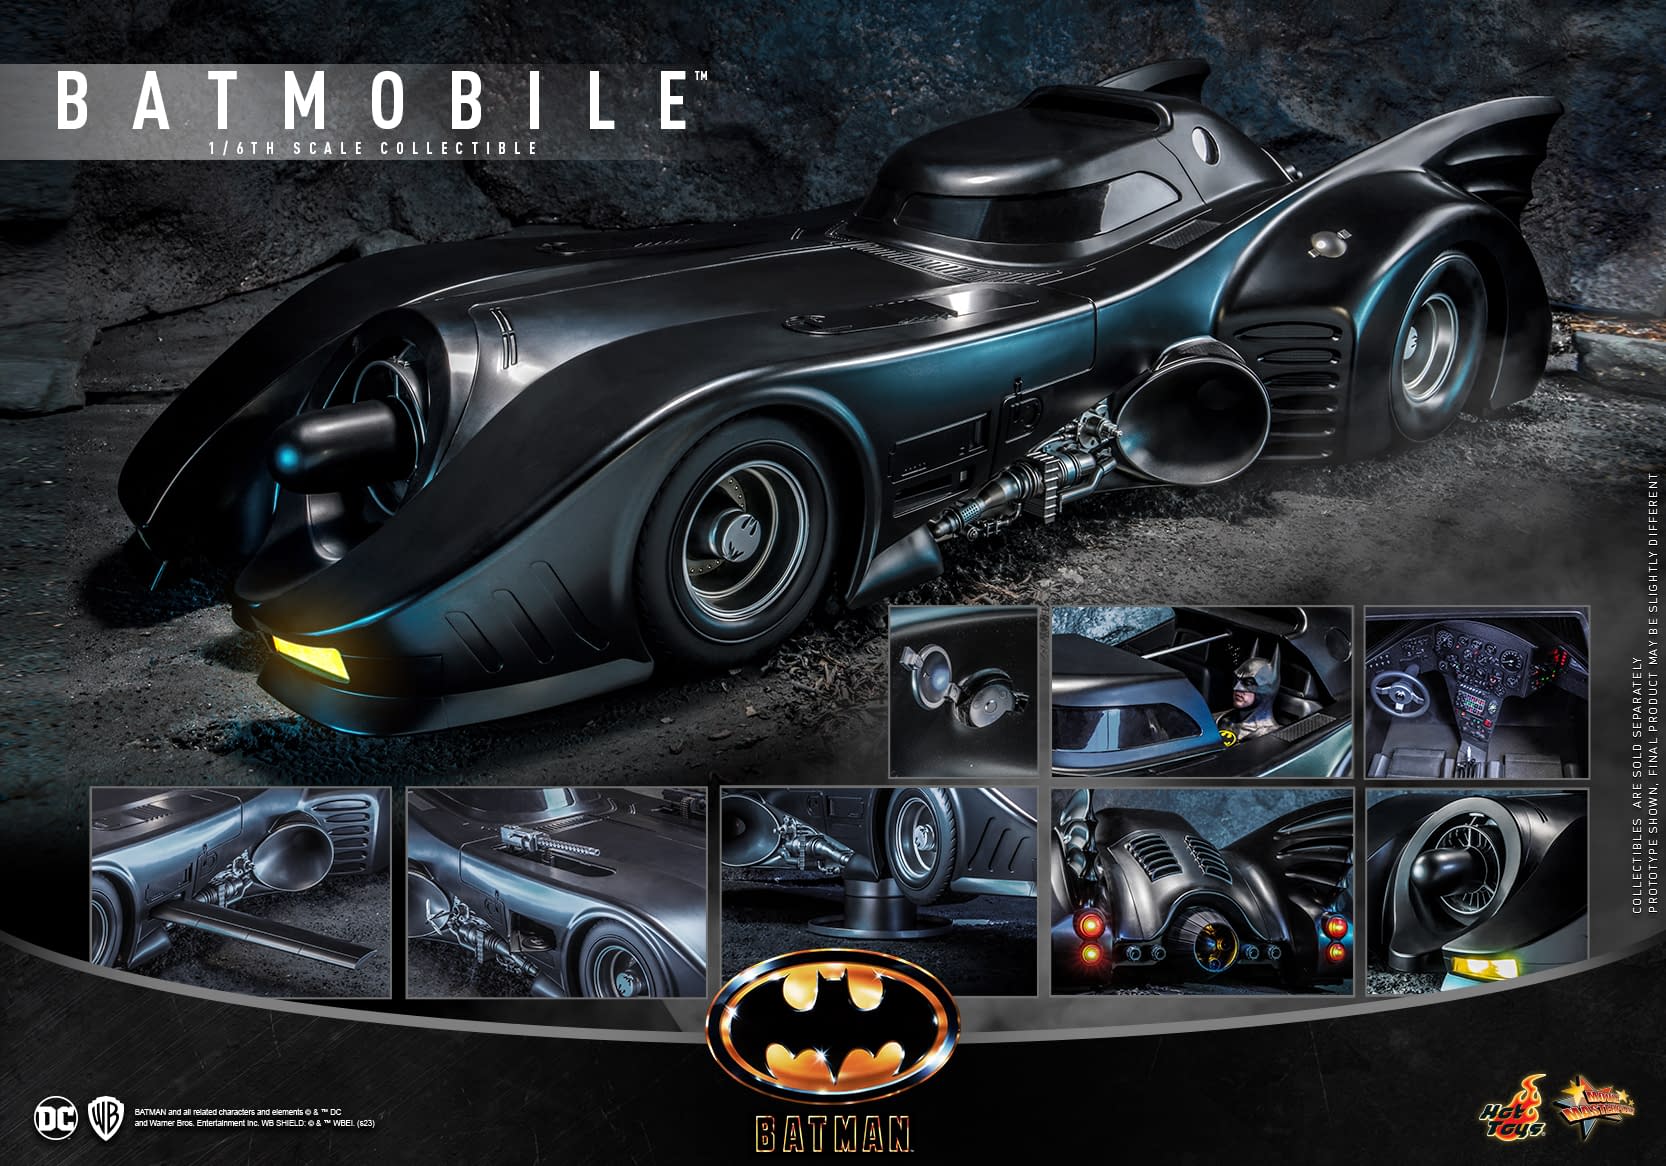 Hot Toys Reveals Massive 1/6 Scale Batman 1989 Batmobile